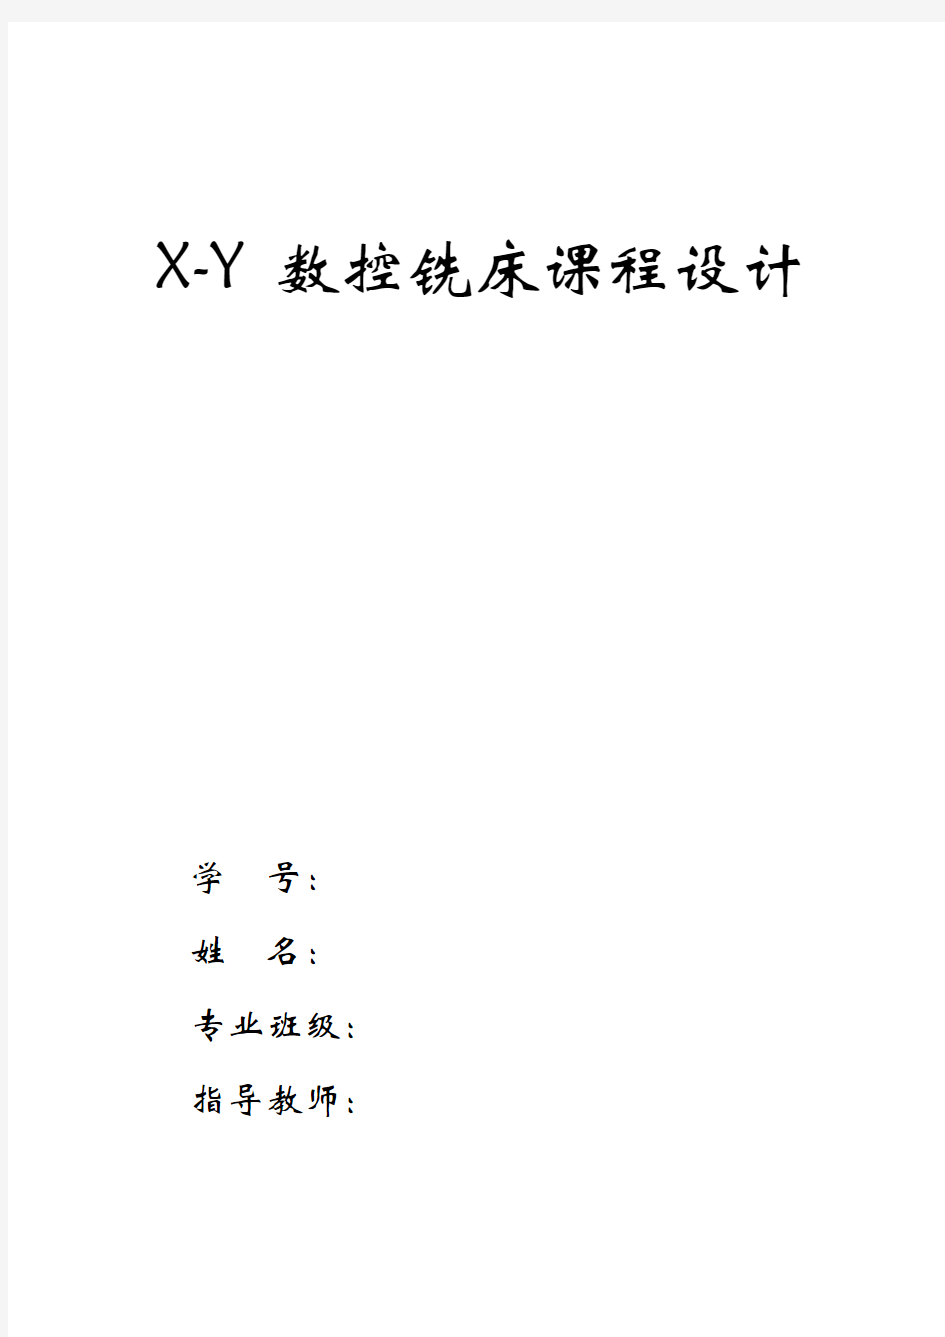 XY数控铣床课程设计